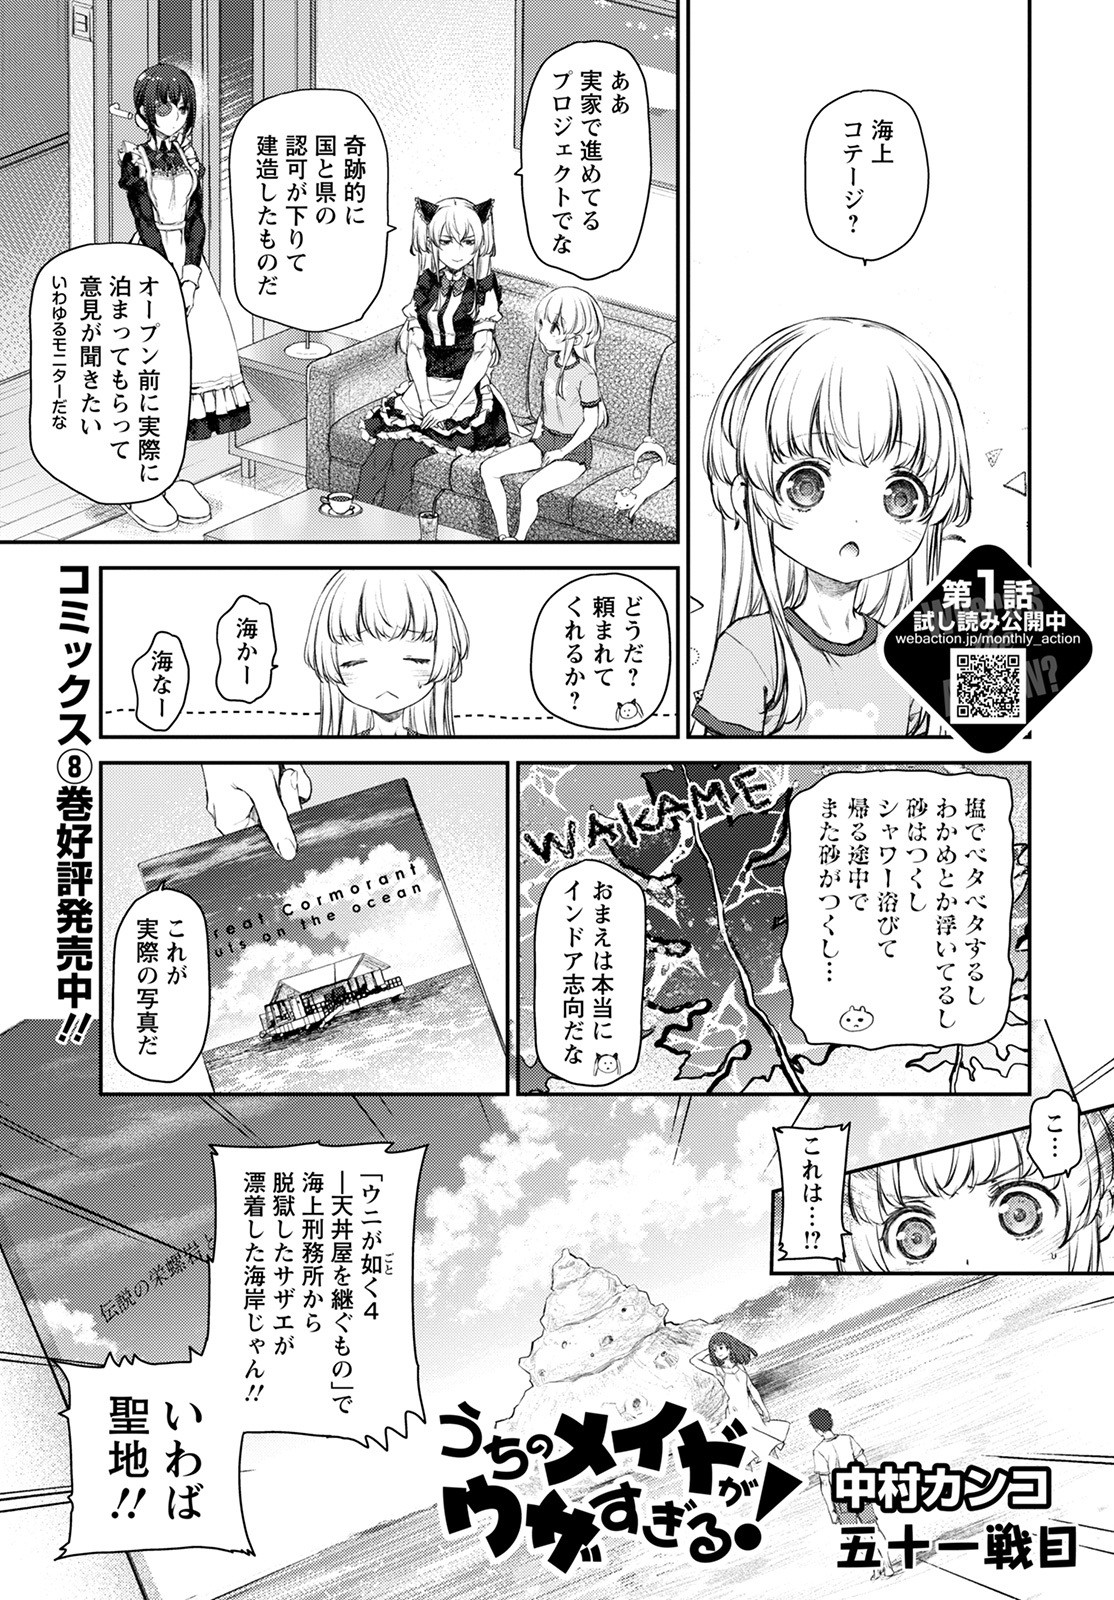 Uchi no Maid ga Uzasugiru! - Chapter 51 - Page 1